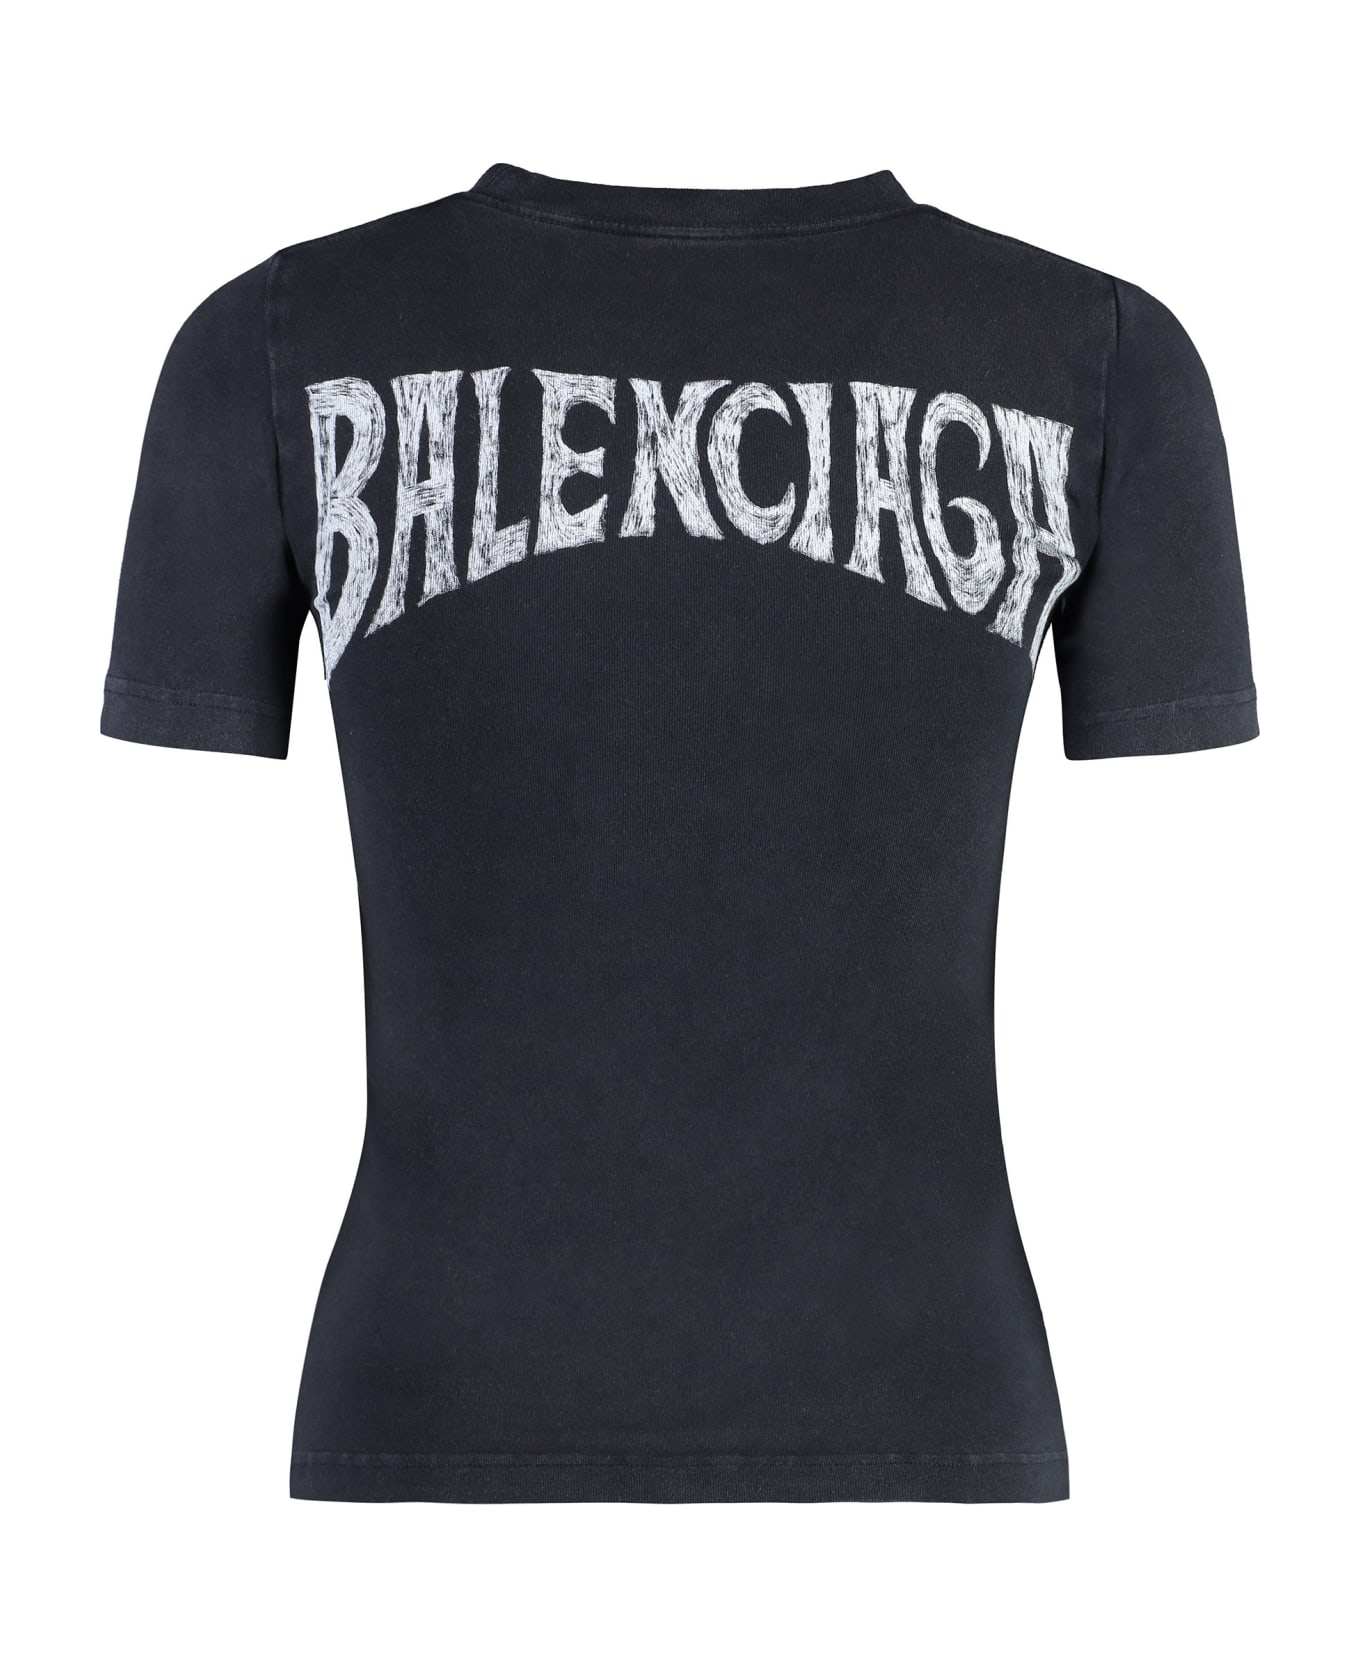 Balenciaga Printed Cotton T-shirt - black